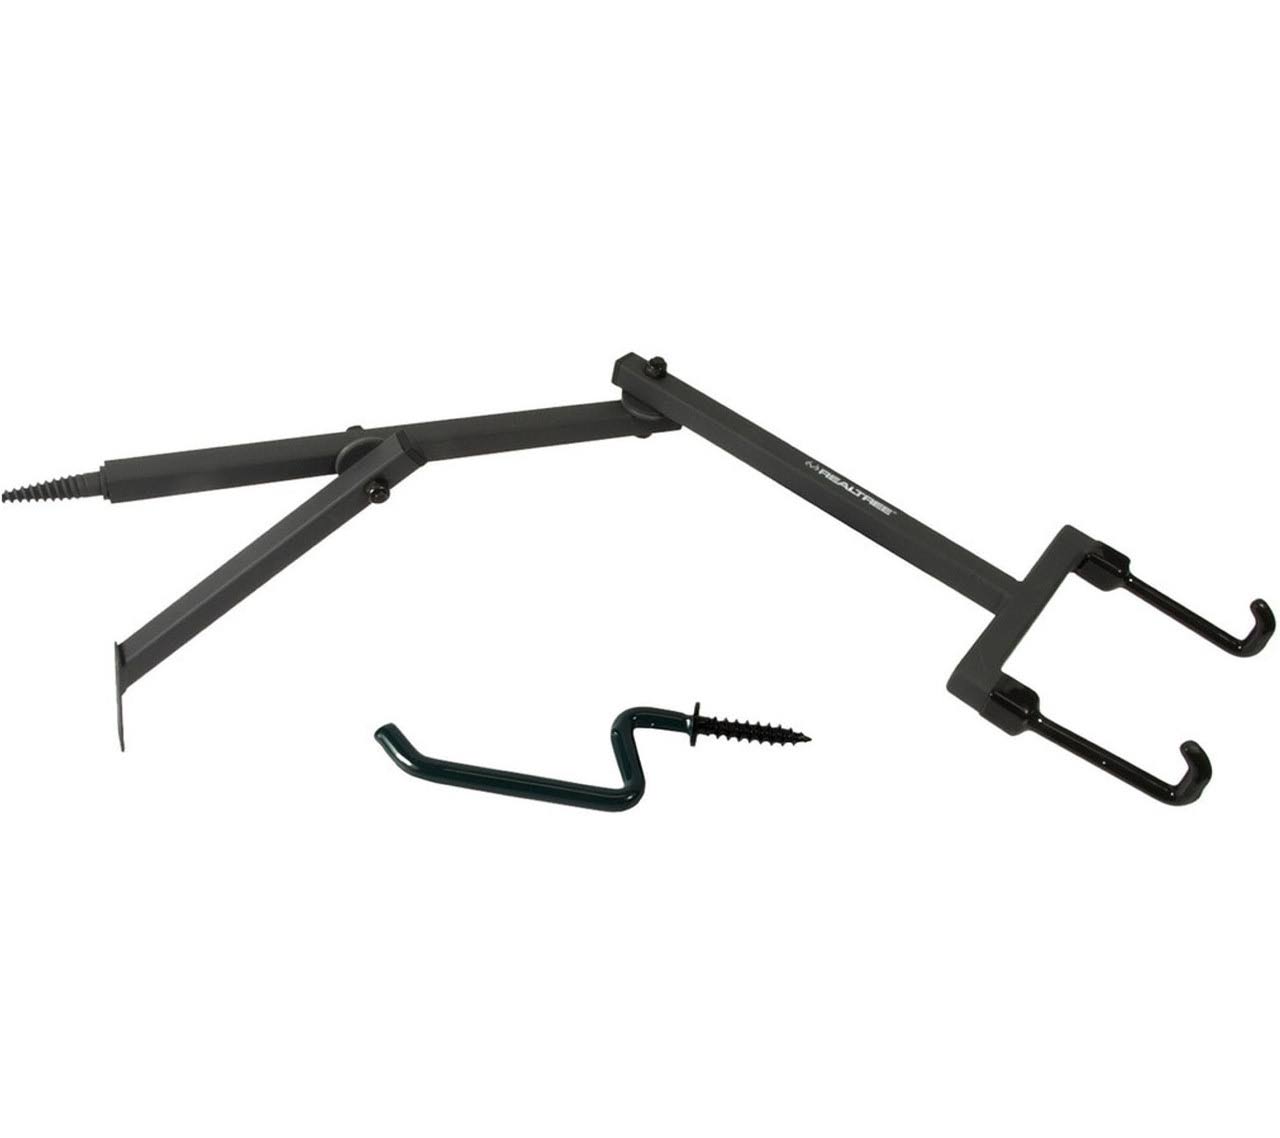 Realtree EZ Crossbows Hanger - Charcoal